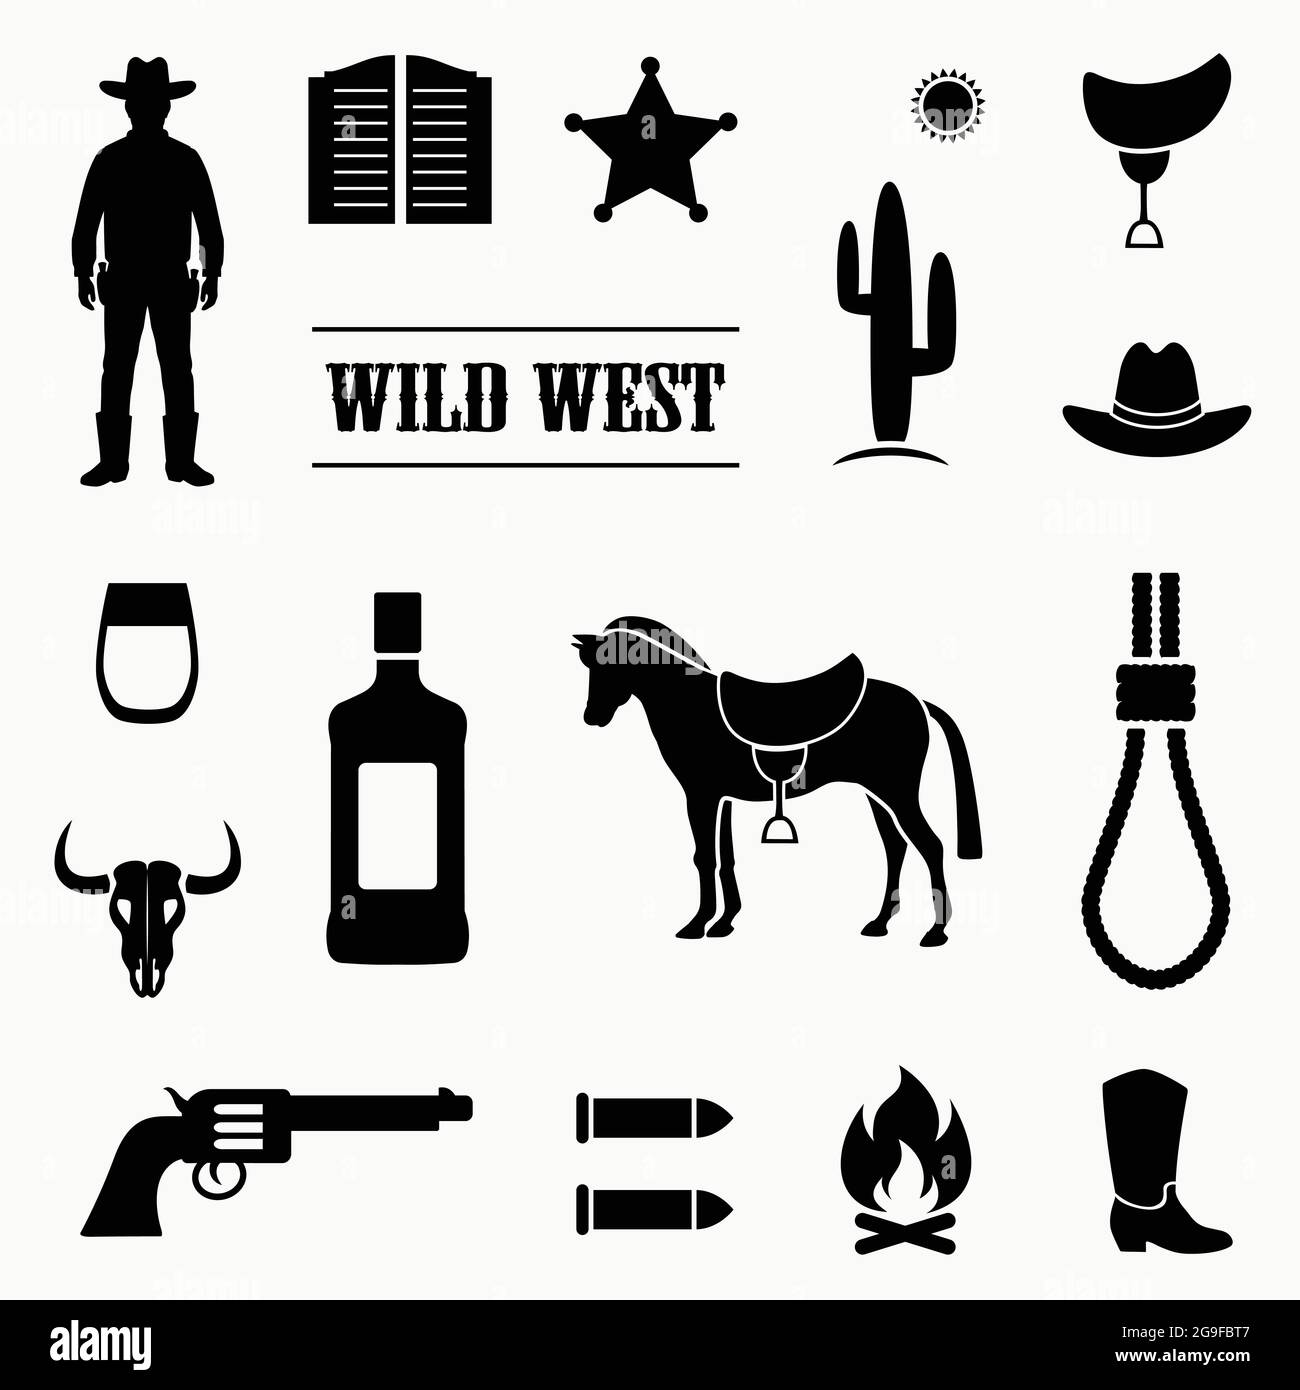 wild west vector background, western cowboy illustration Stock Vector